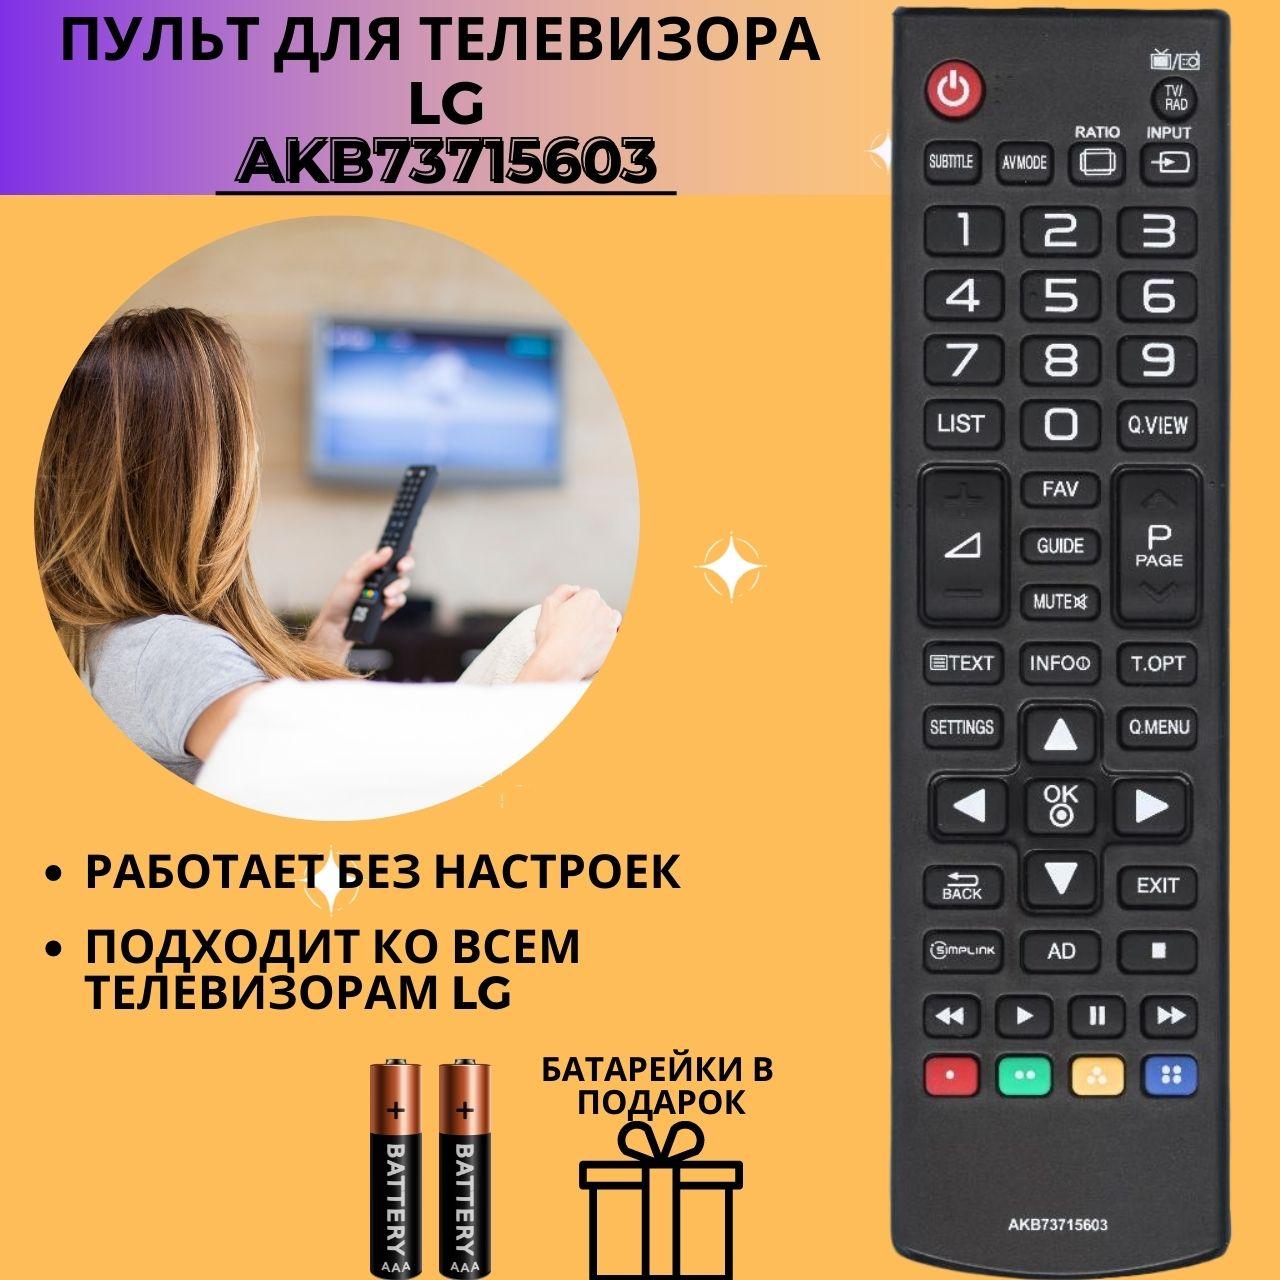 Пульт телевизионный LG AKB73715603 ic LCD LED TV NEW